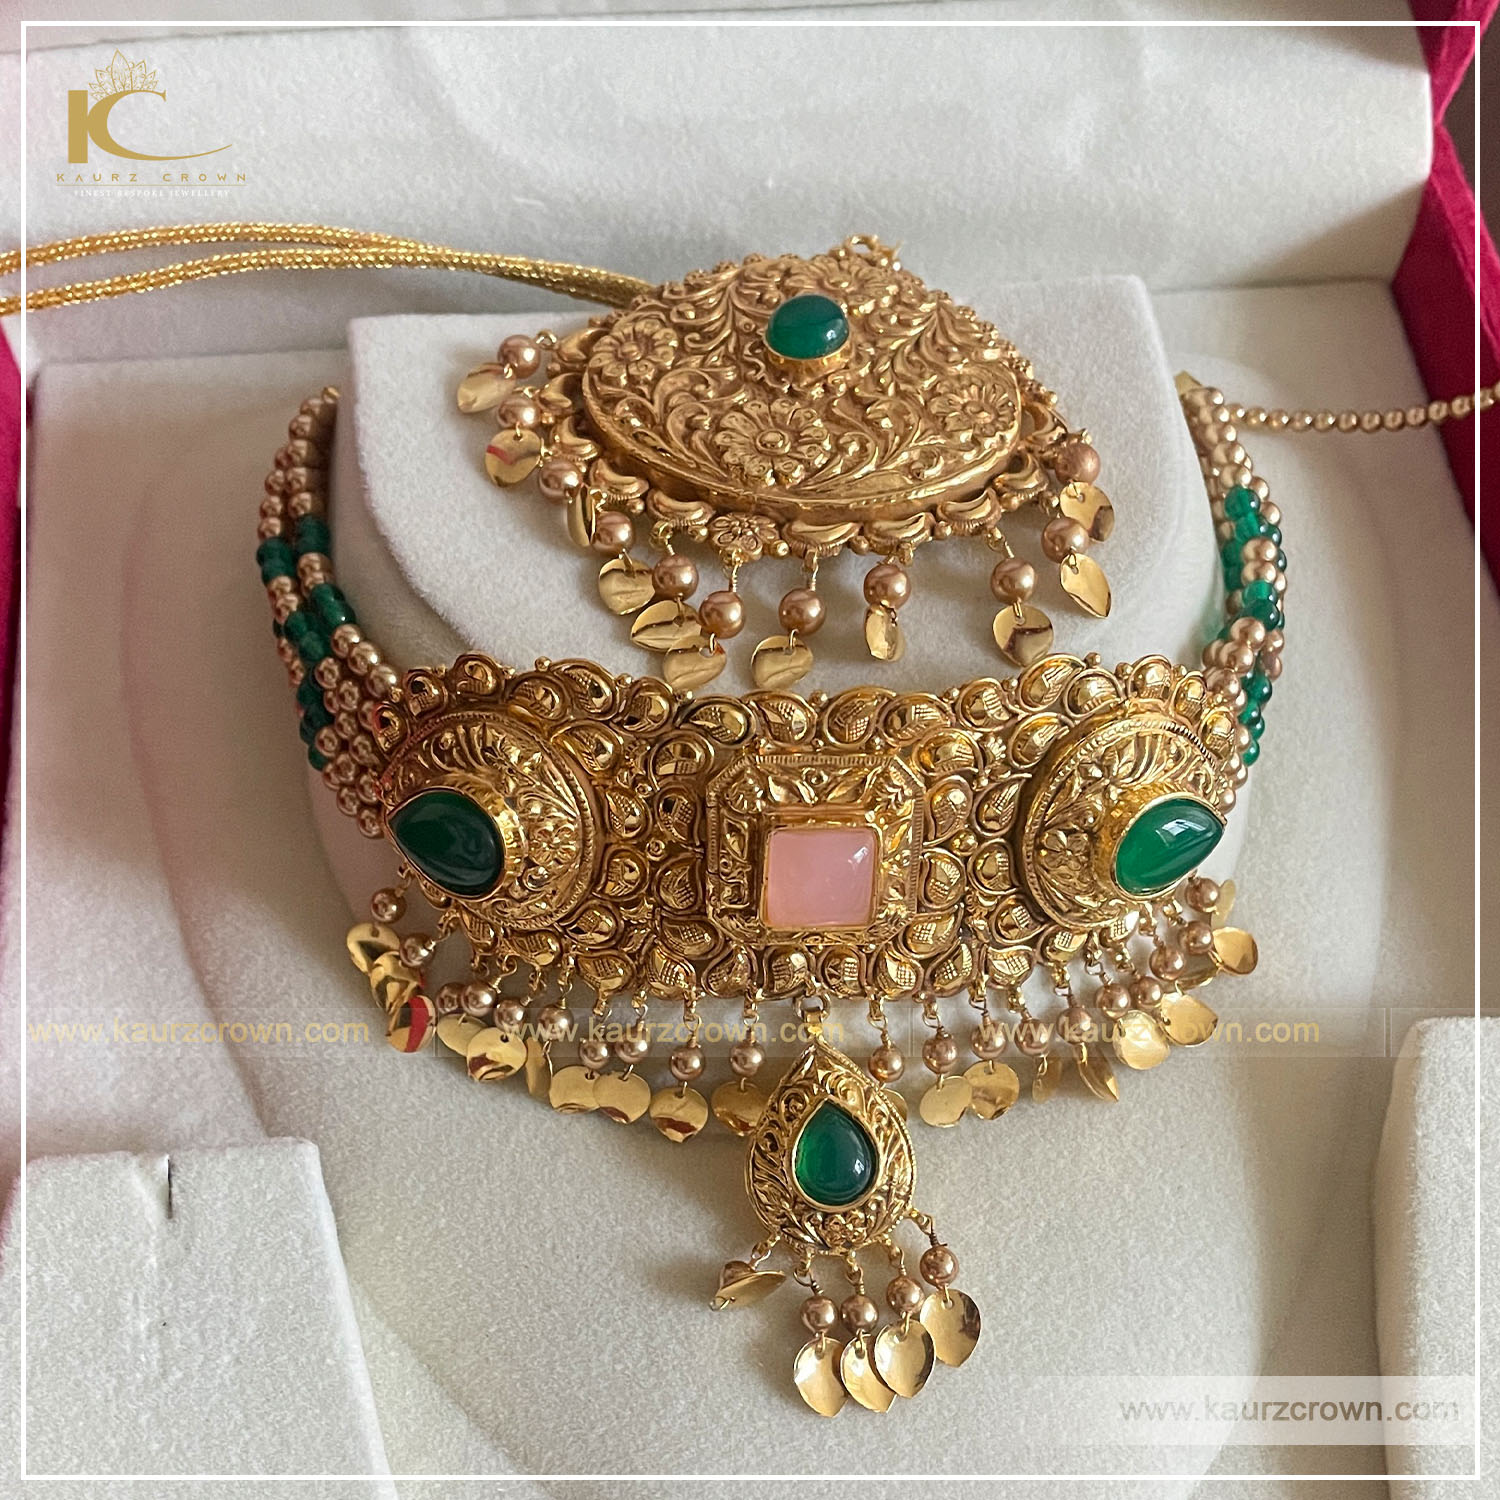 Liyakat Pipal Patti Traditional Antique Gold Plated Choker Set , kaurz crown , punjabi jewellery , pipal patti , gold plated , liyakat choker set